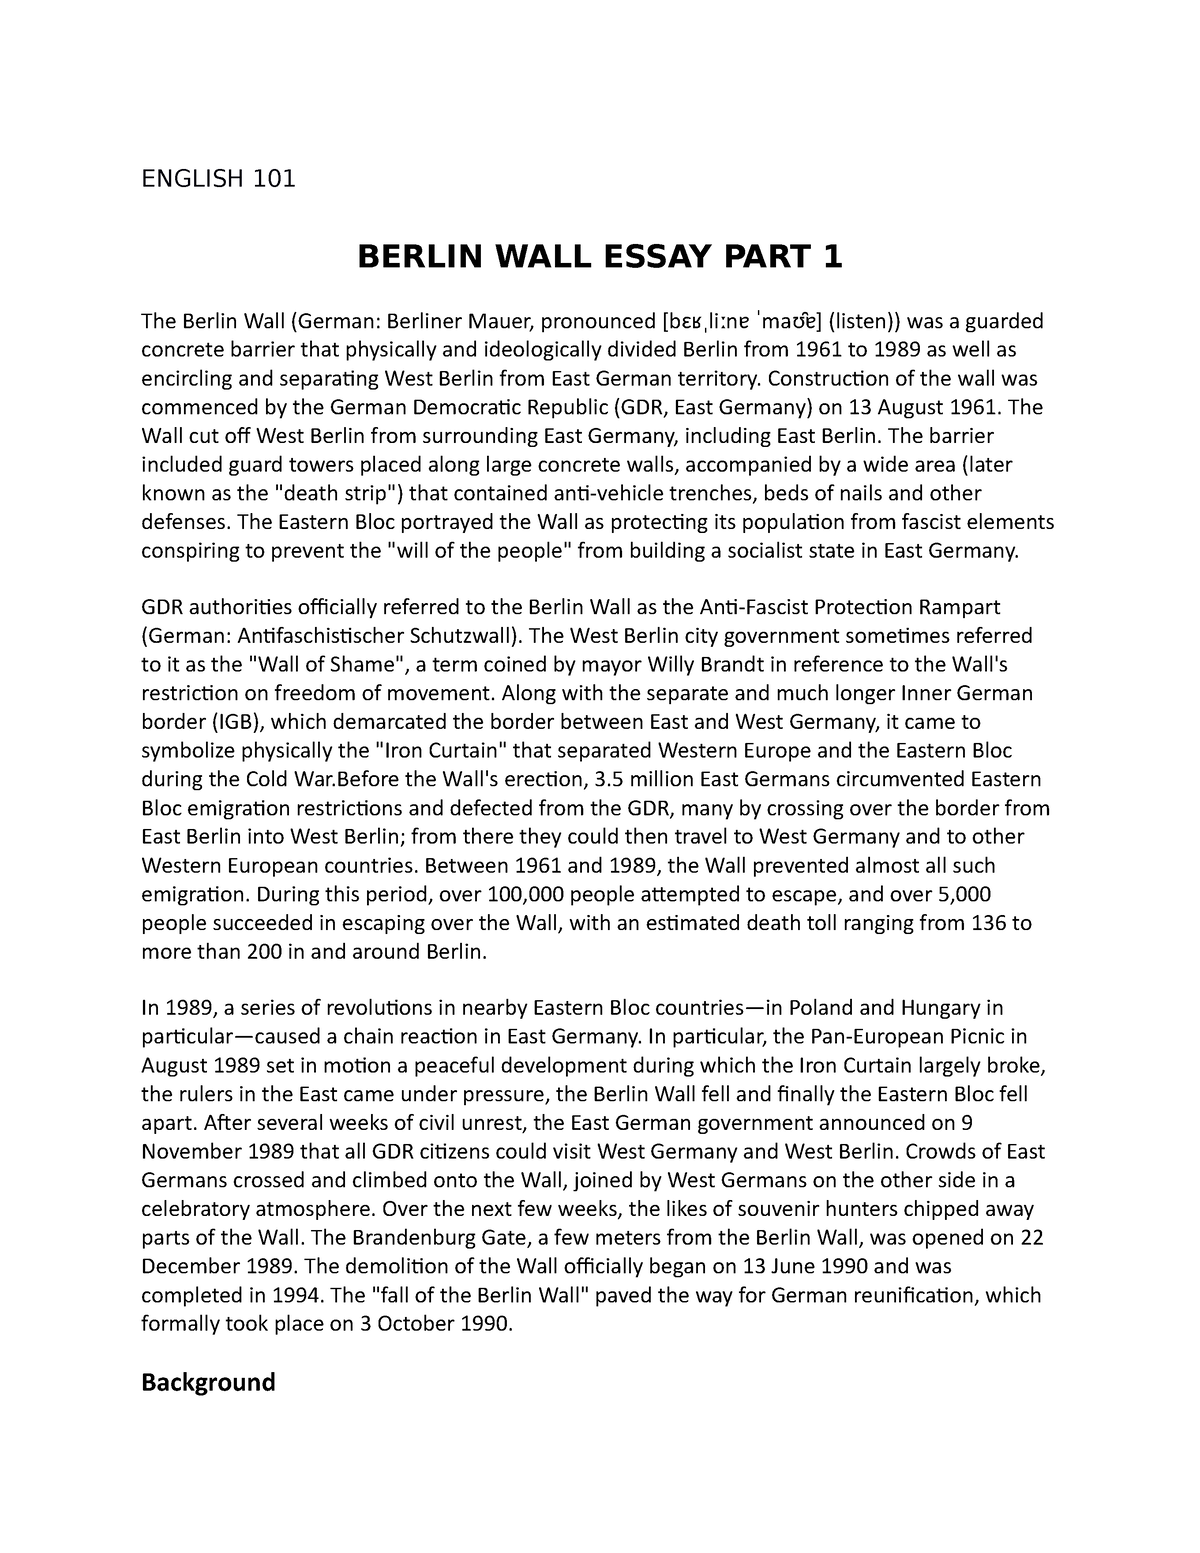 berlin wall essay introduction